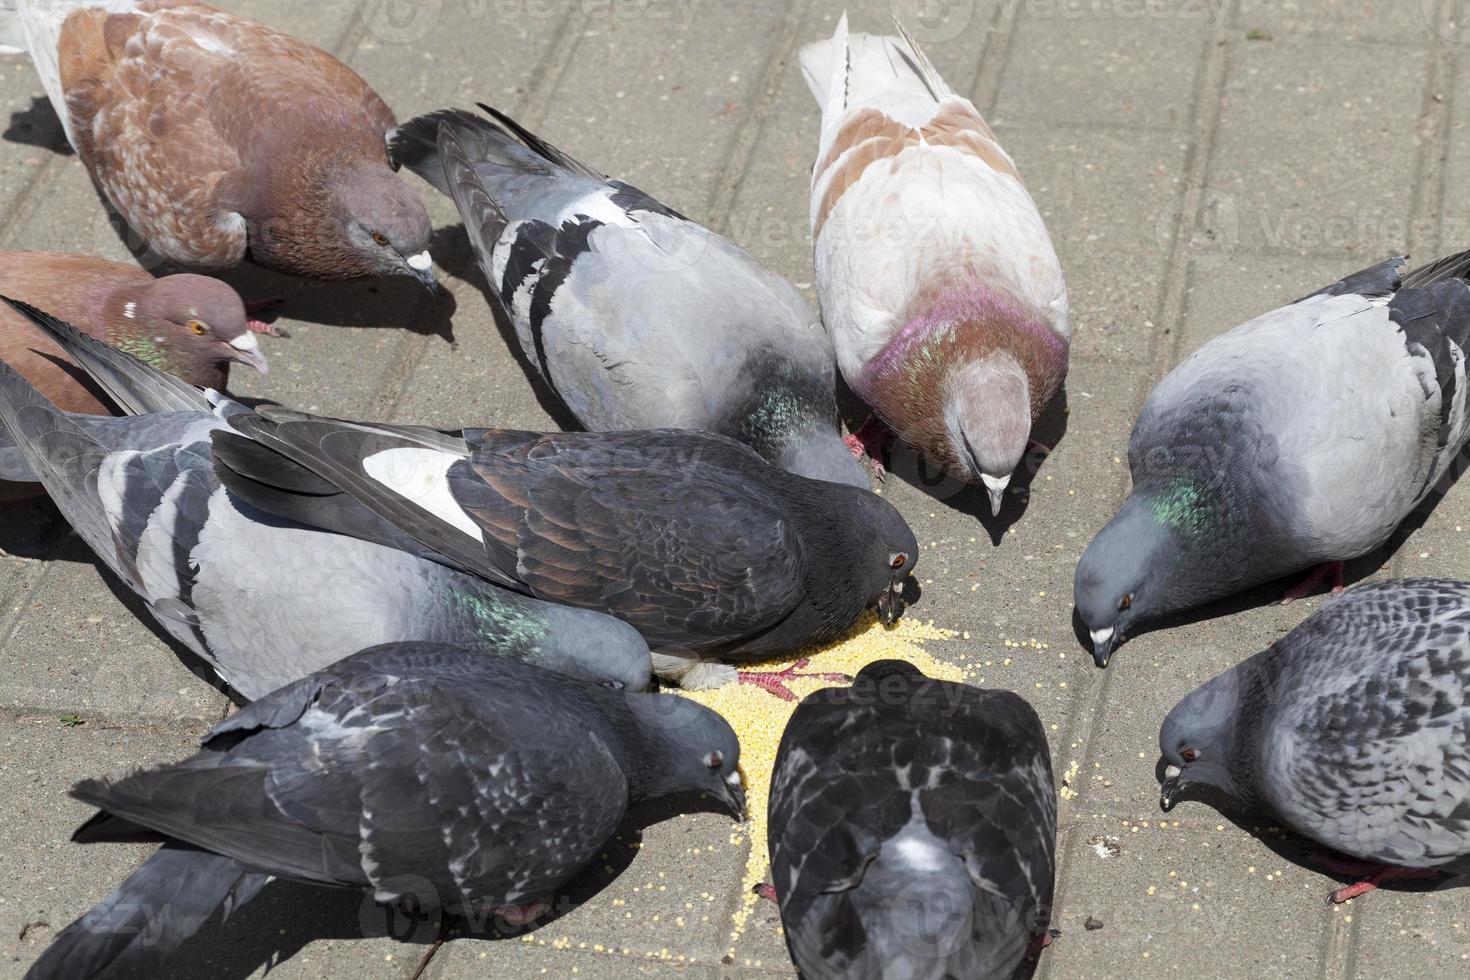 pigeons feeding, close up photo